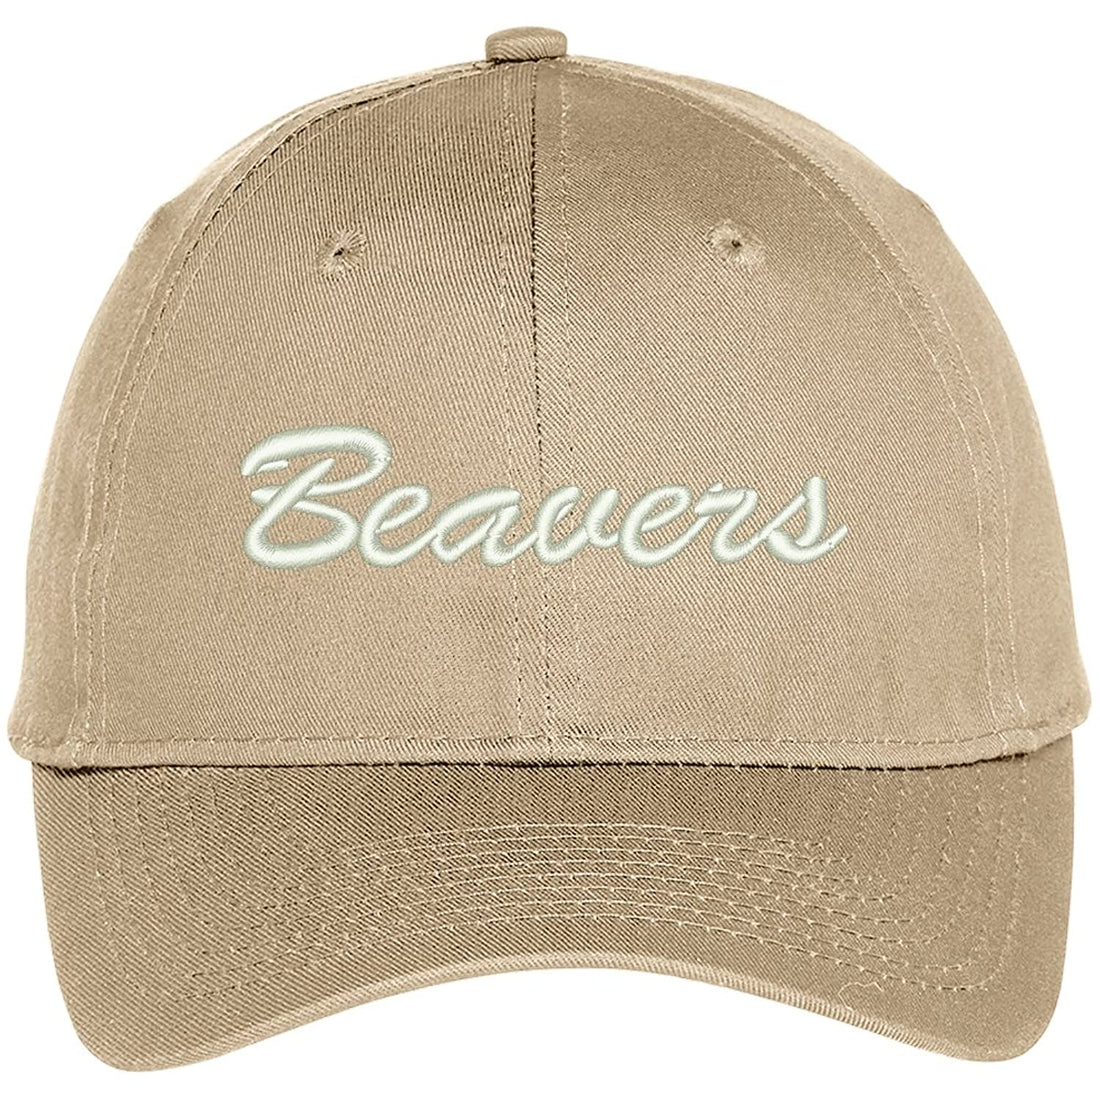 Trendy Apparel Shop Beavers Embroidered Team Nickname Mascot Cap